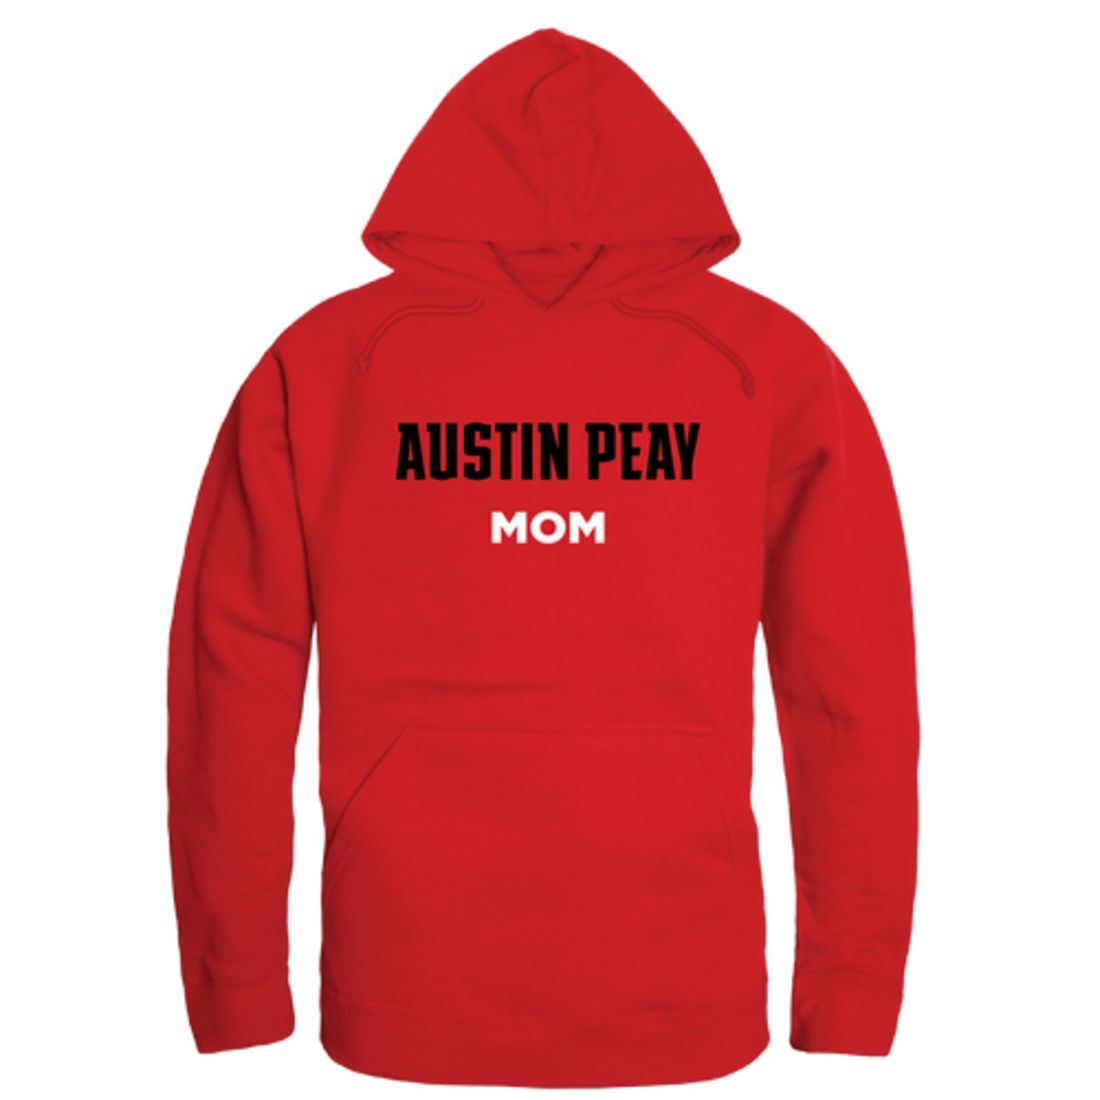 APSU Austin Peay State University Governors Mom Fleece Hoodie Sweatshirts Heather Grey-Campus-Wardrobe